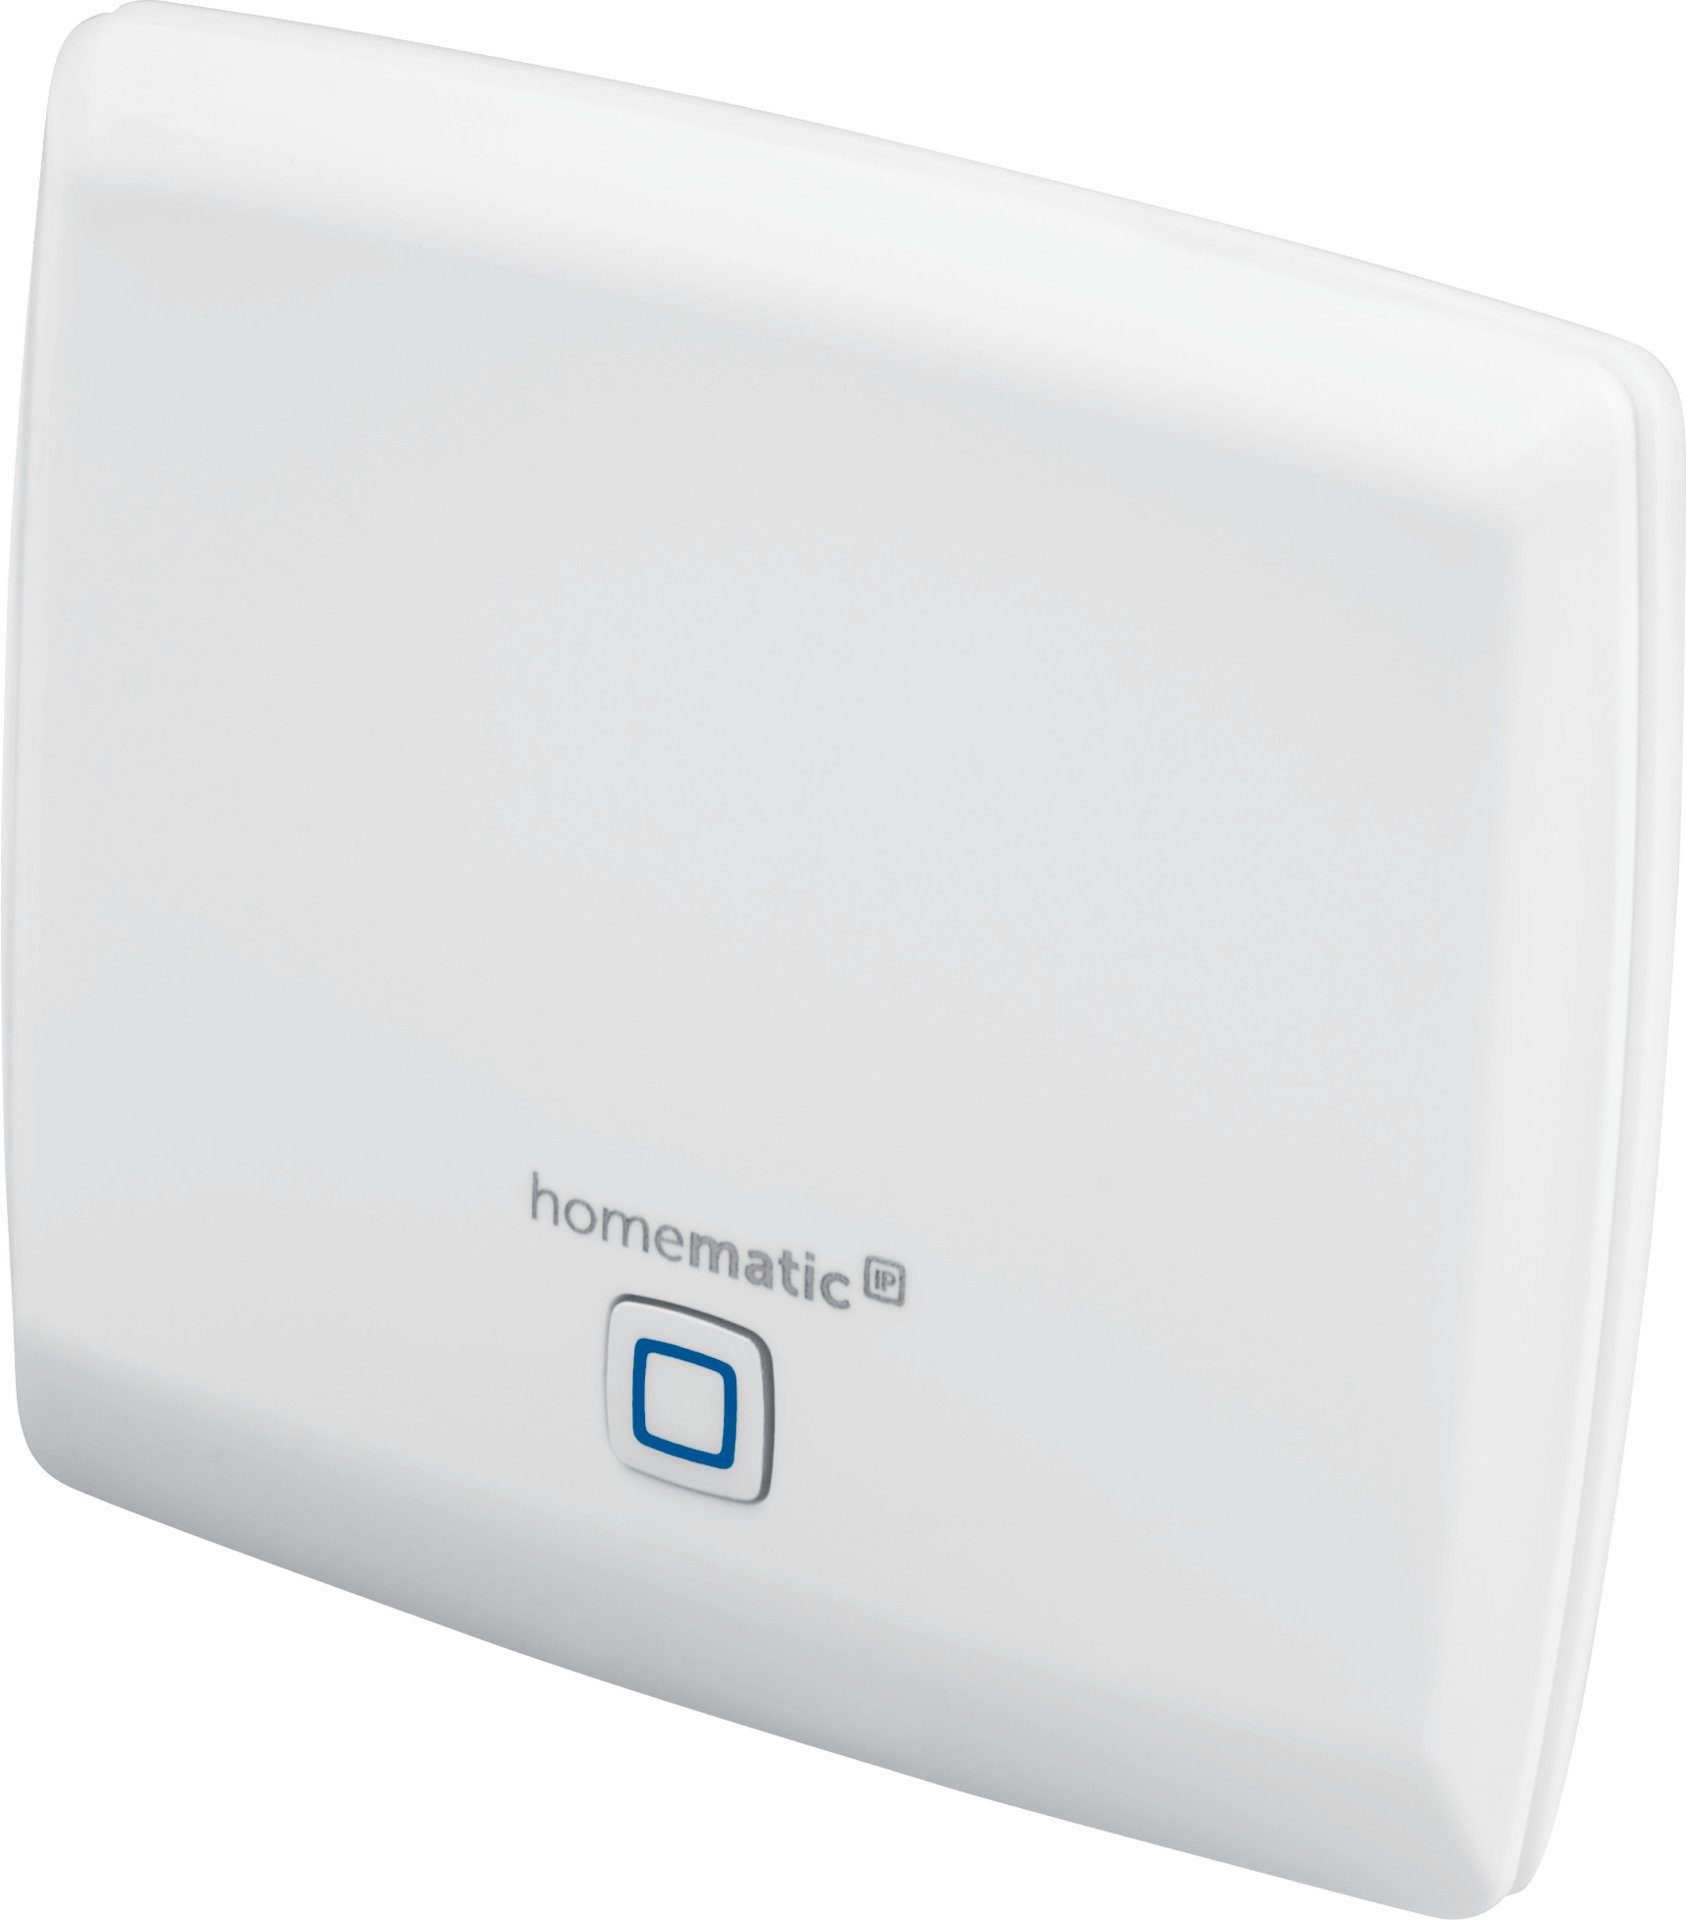 IP Homematic Smart-Home Alarm Starter-Set